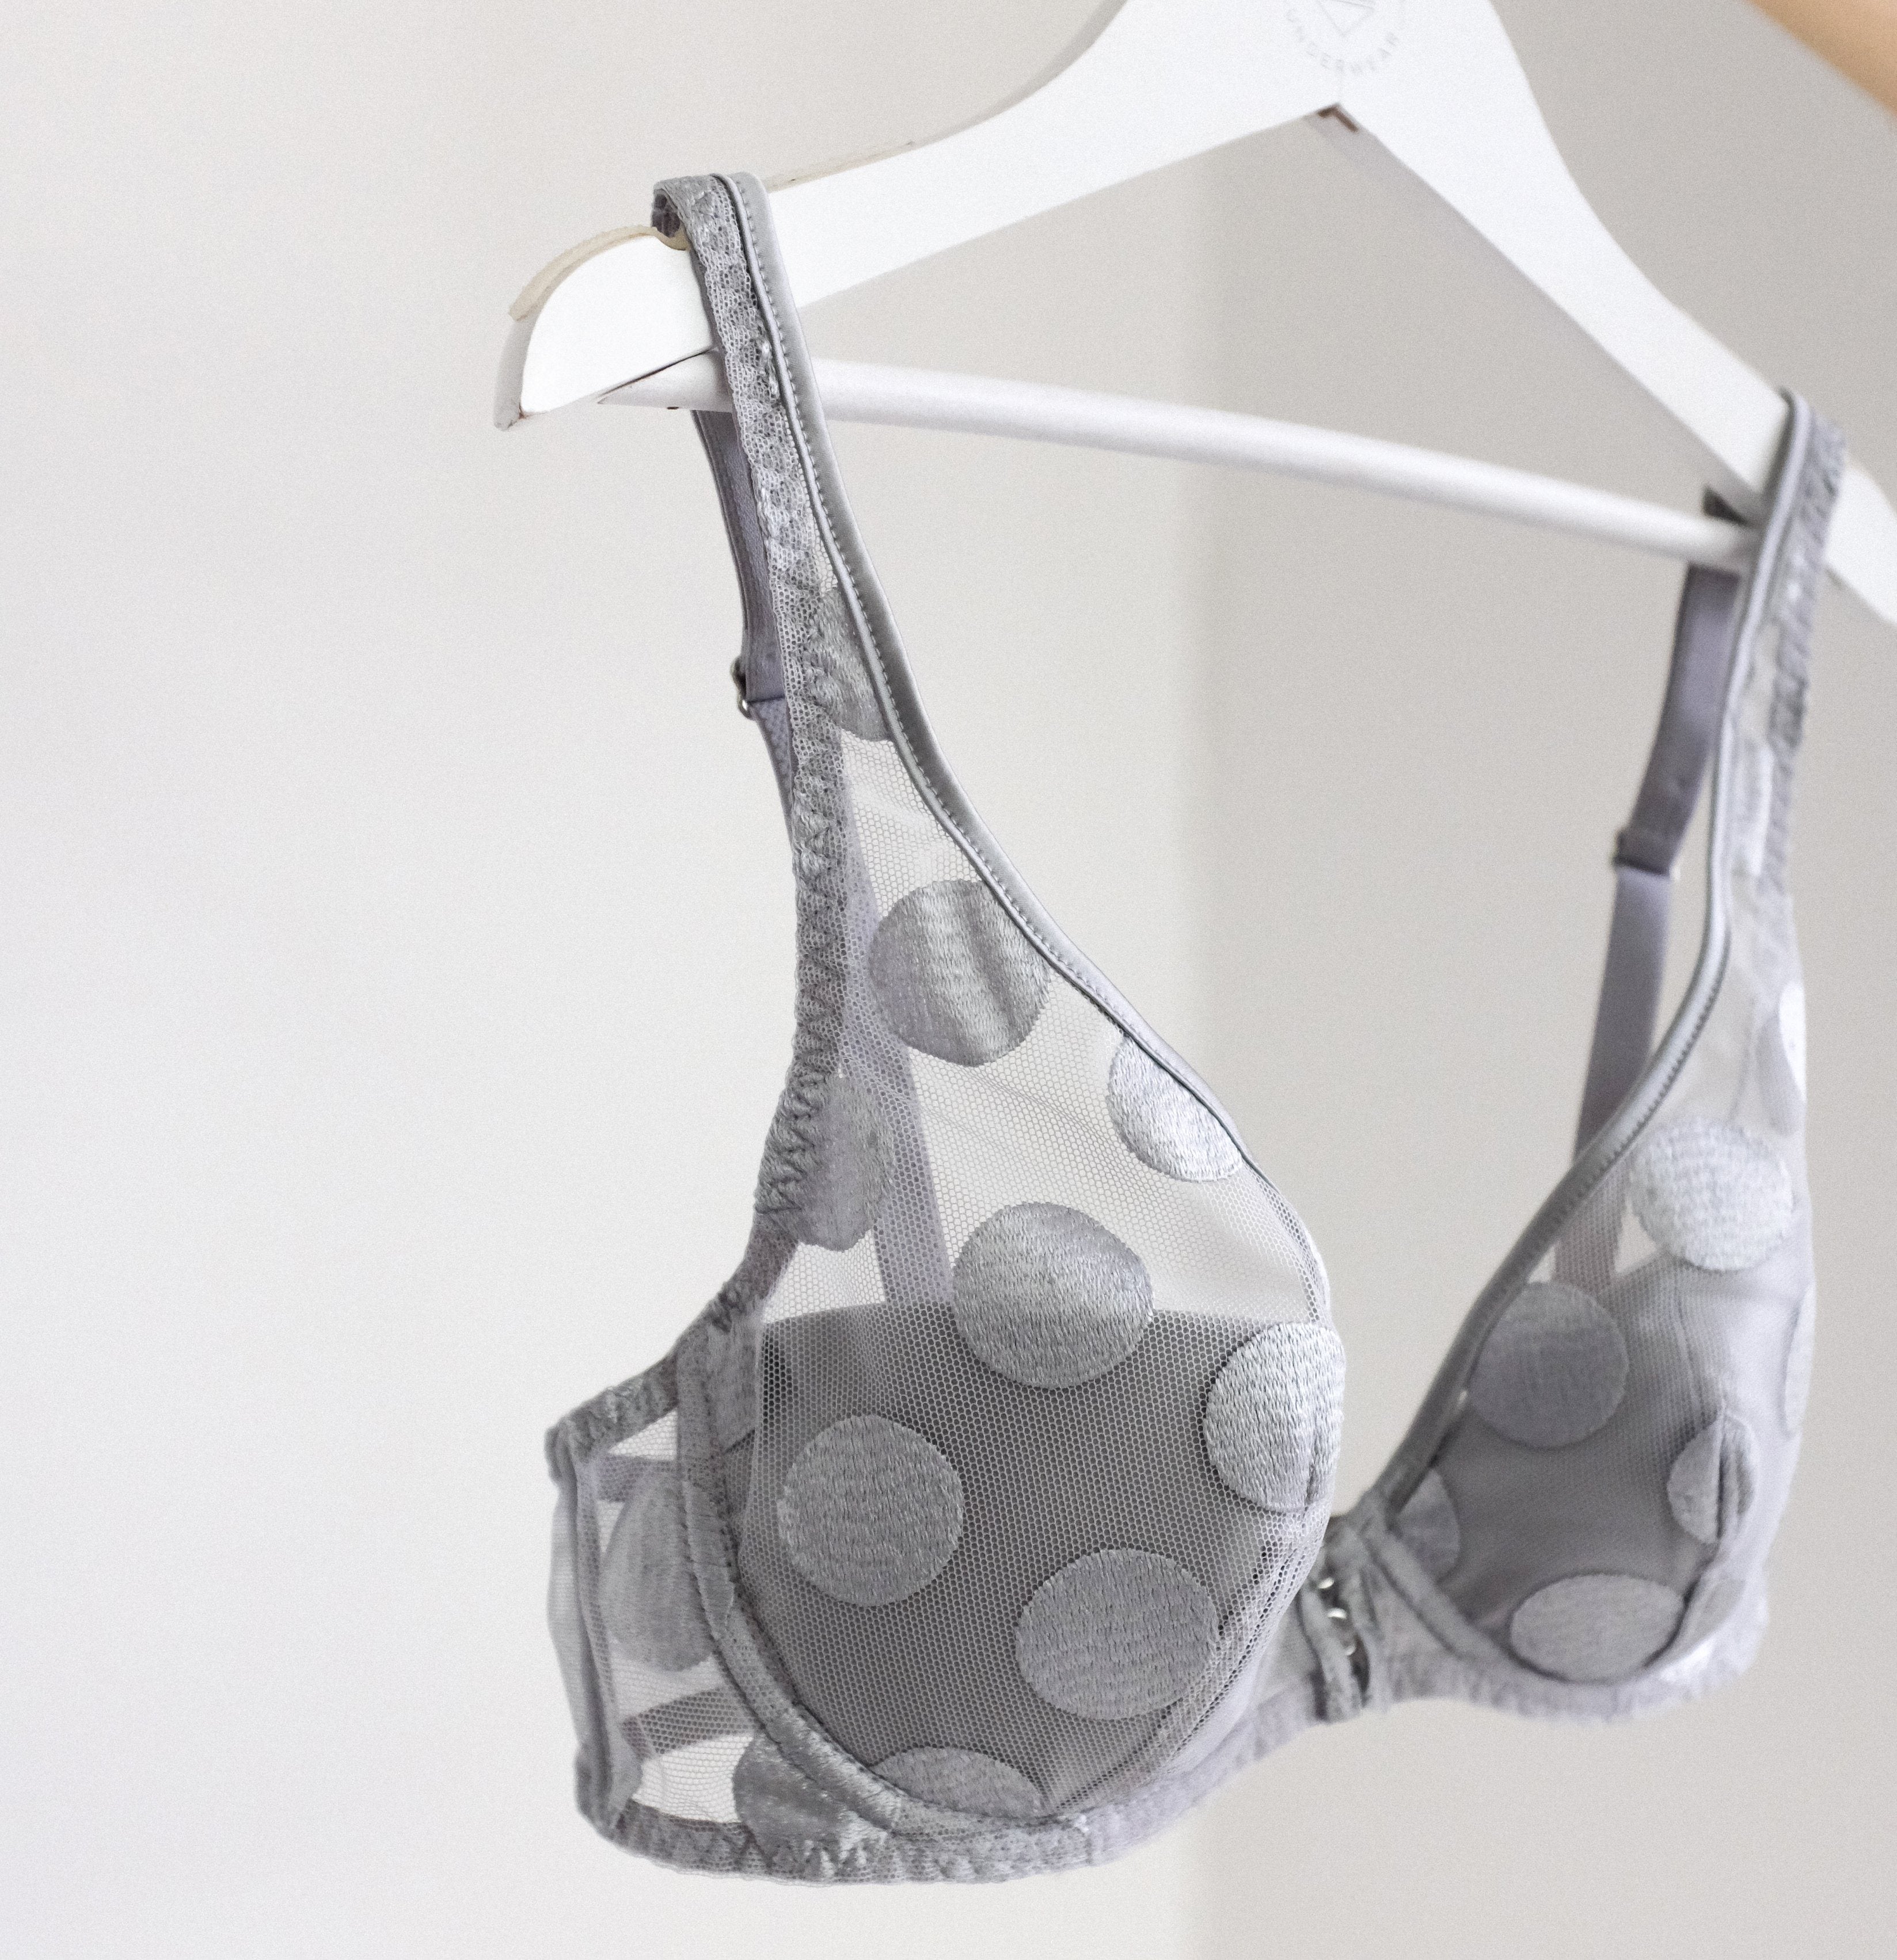 Spot detail push up bra [Yellow] – The Pantry Underwear